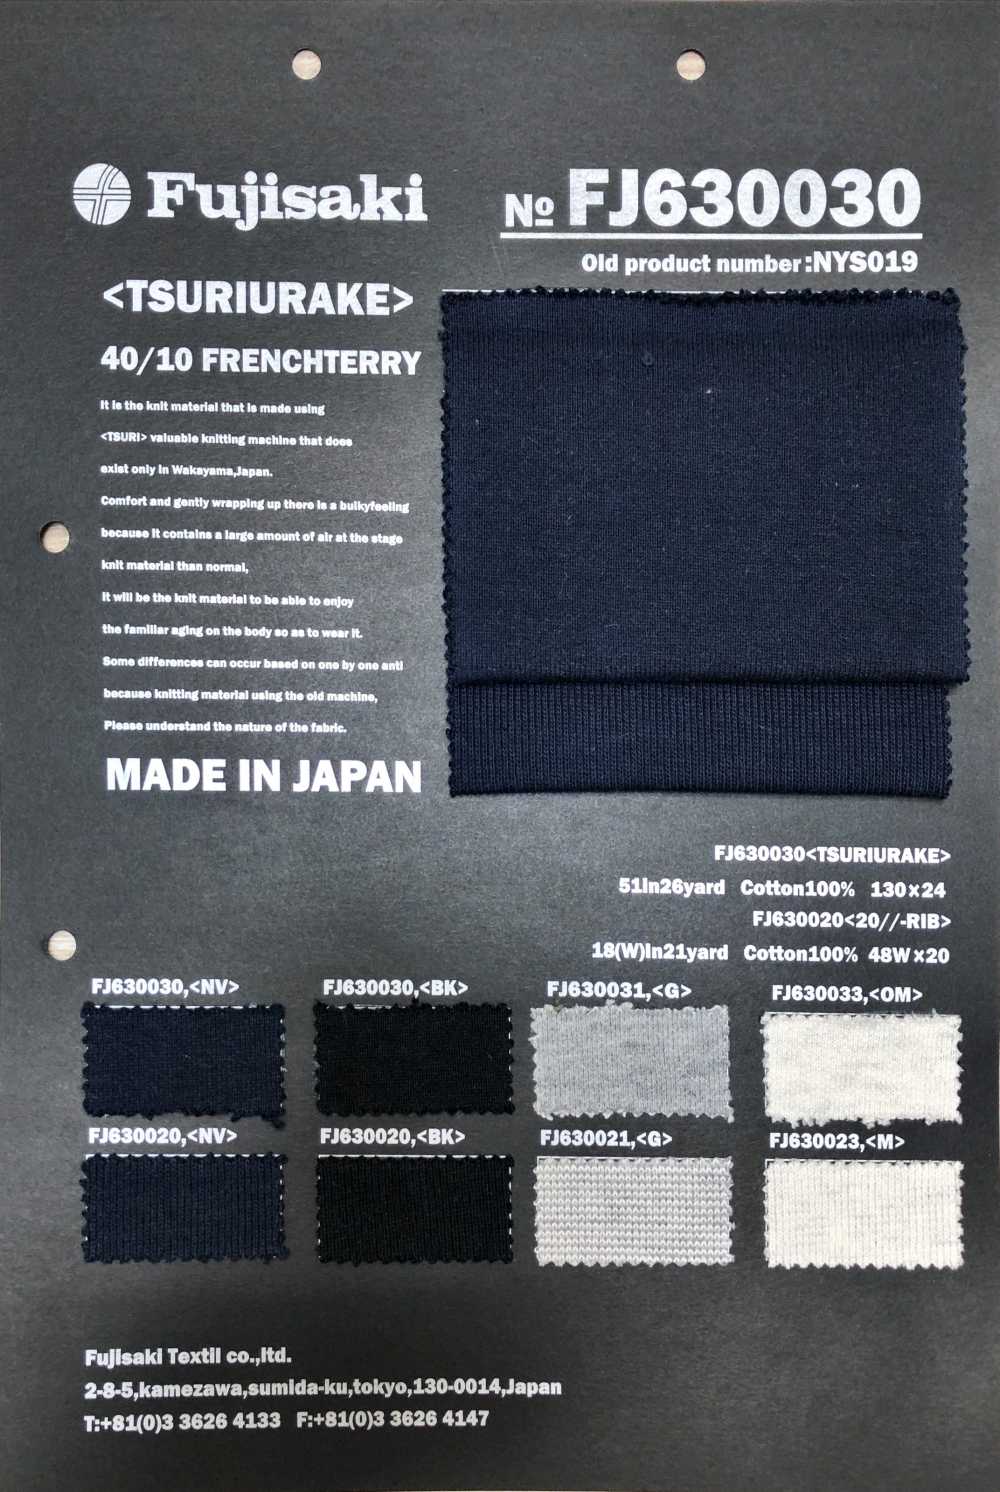 FJ630030 프렌치 테리 컷 톱 원단 Fujisaki Textile